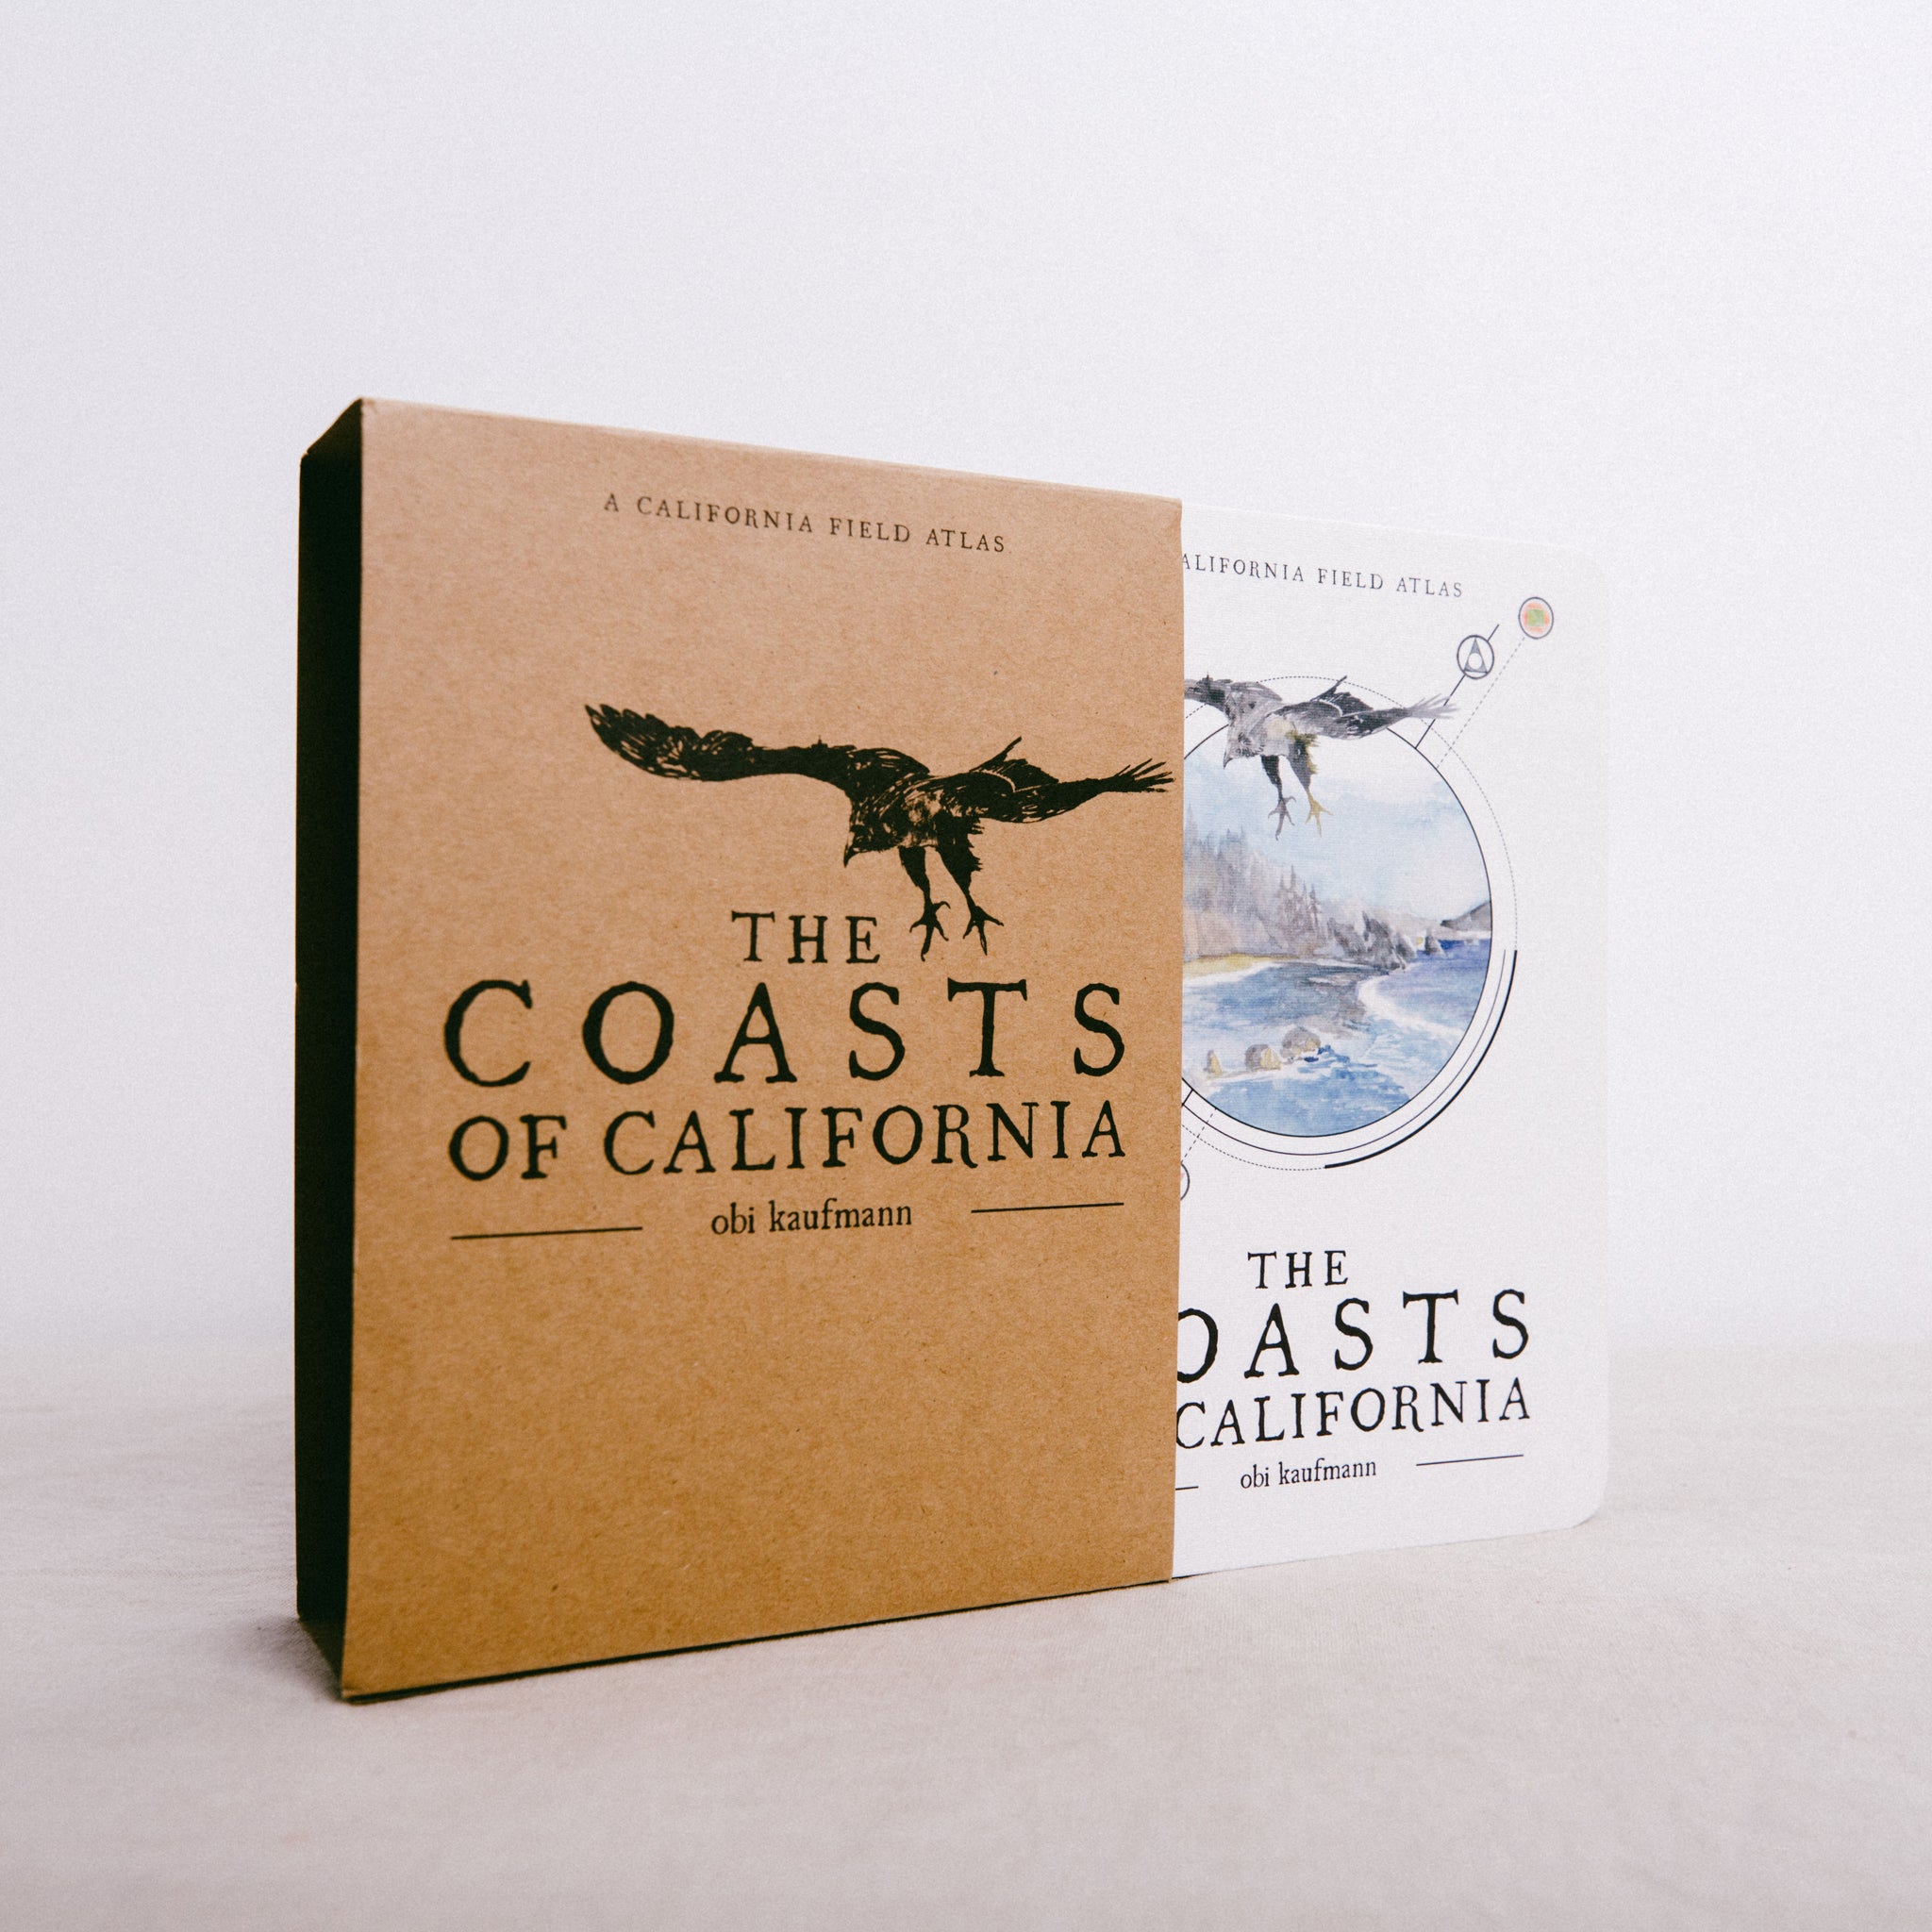 THE COASTS OF CALIFORNIA || OBI KAUFMANN